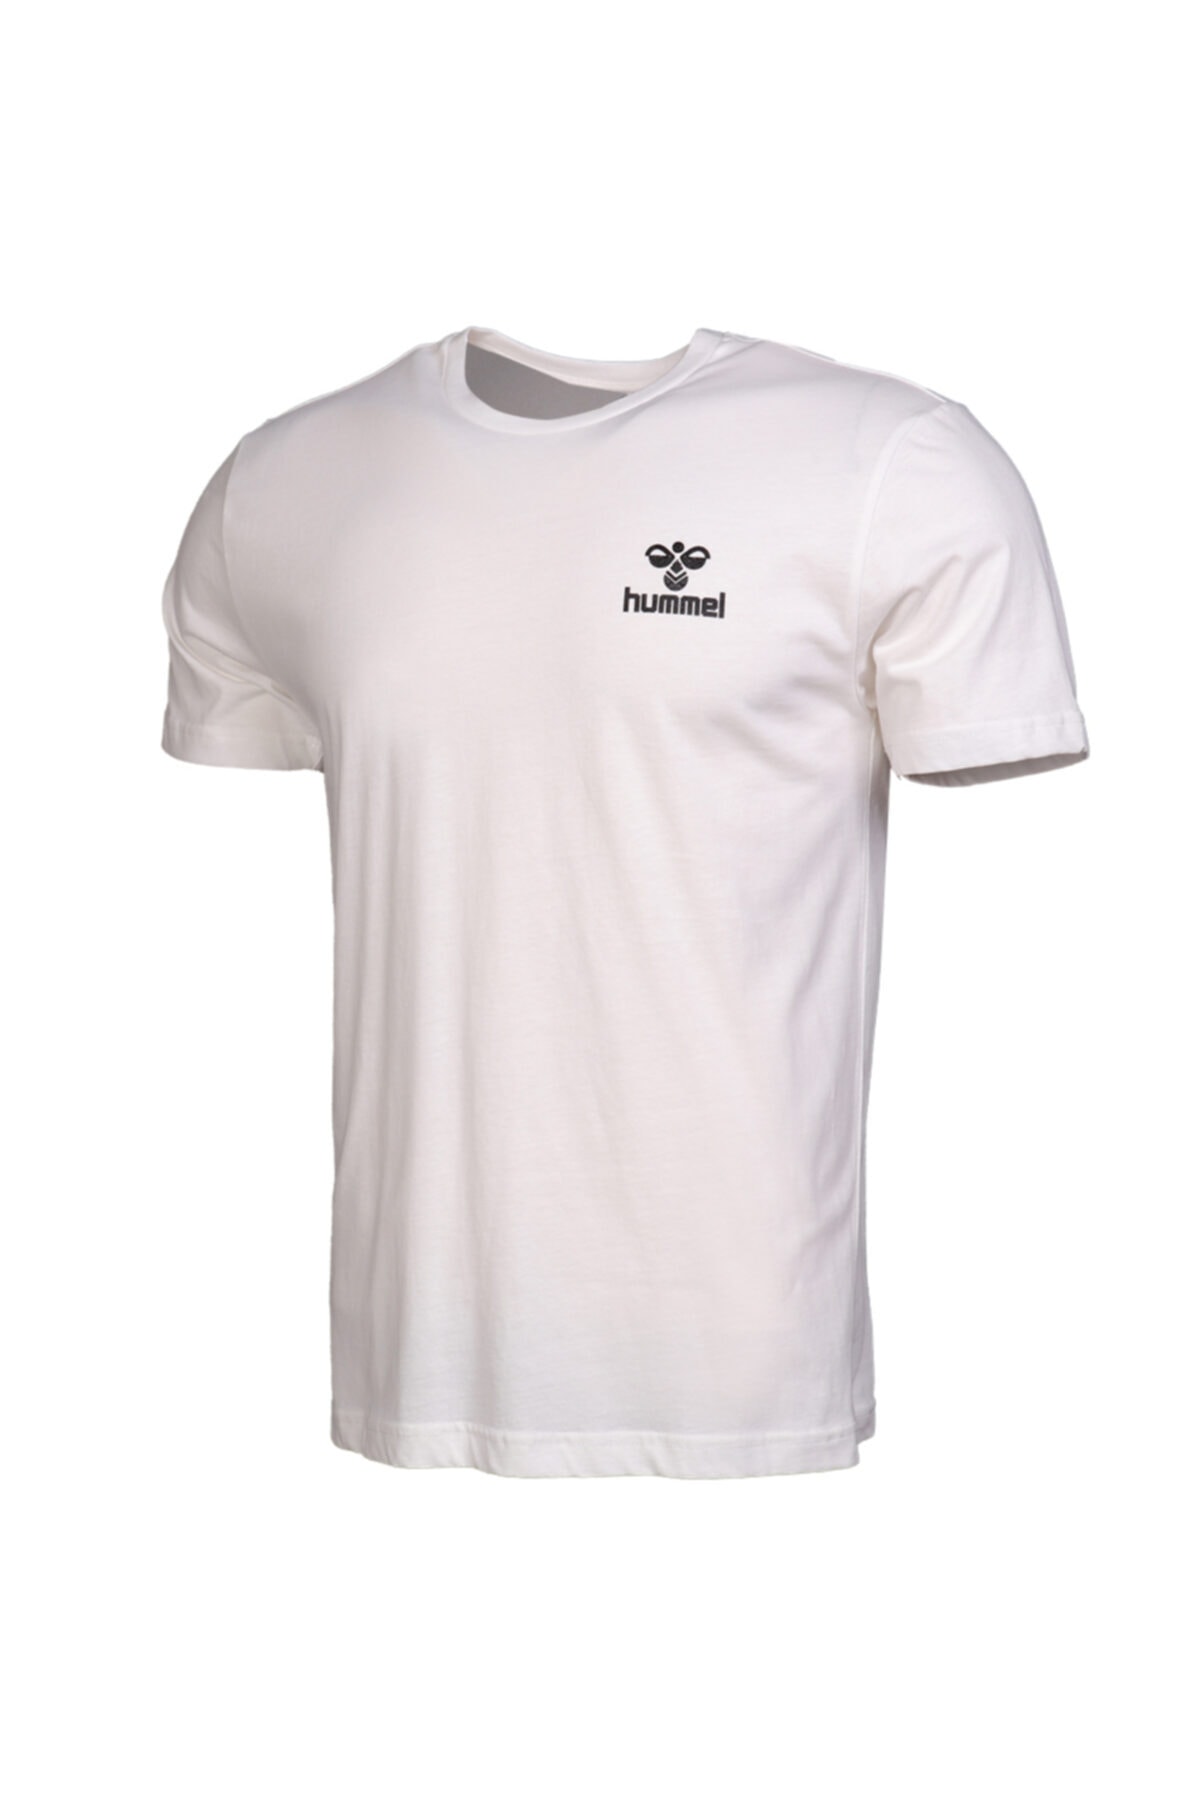 HUMMEL Keaton Beyaz Kısa Kollu T-Shirt